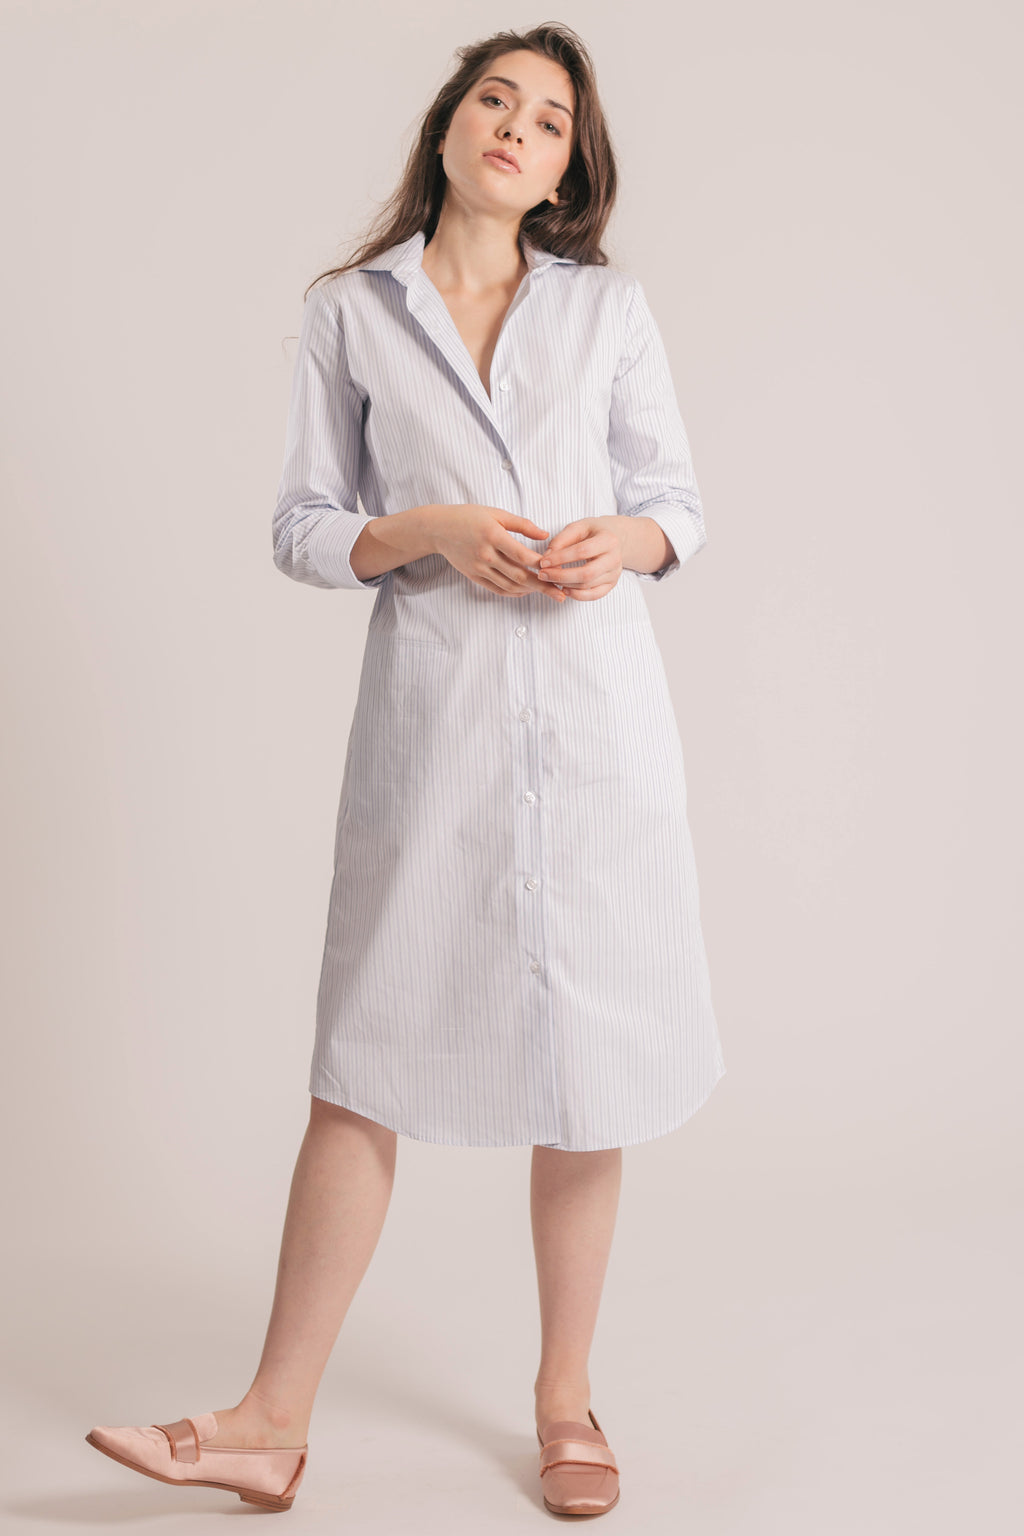 RYAN ¾ Sleeve Shirtdress - White and Blue Stripe